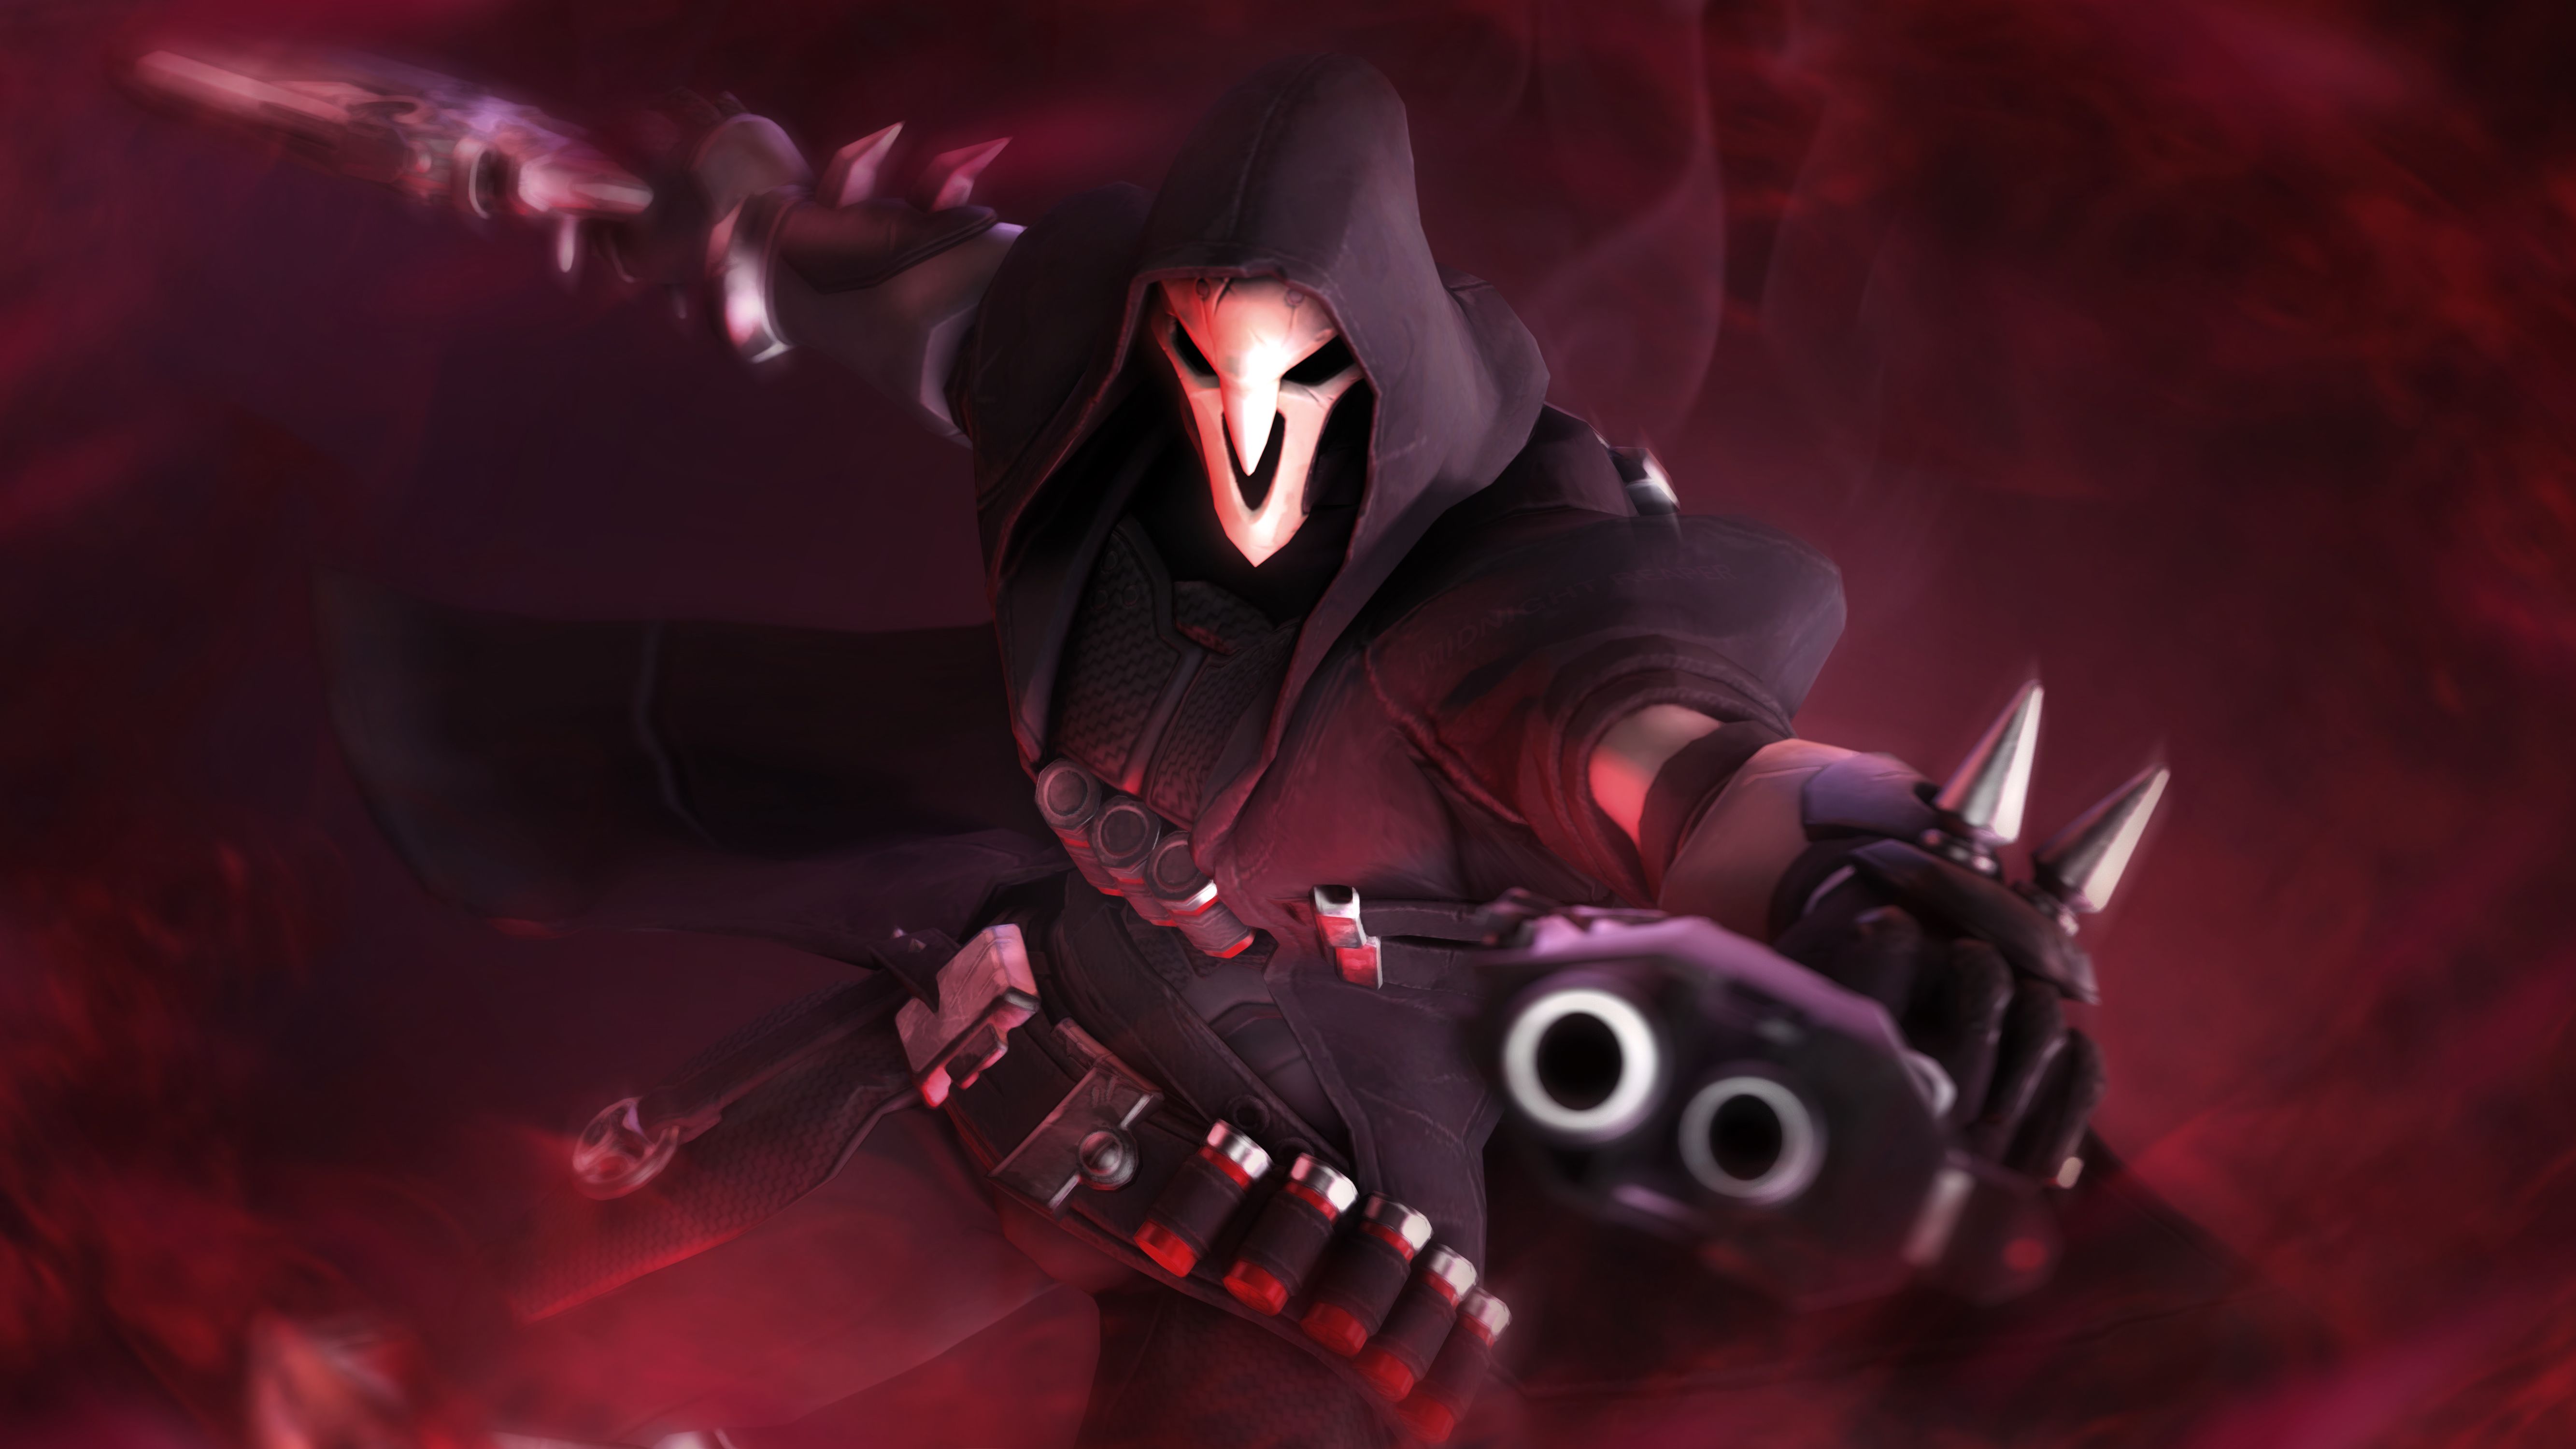 Reaper Overwatch 5k, HD Games, 4k Wallpaper, Image, Background